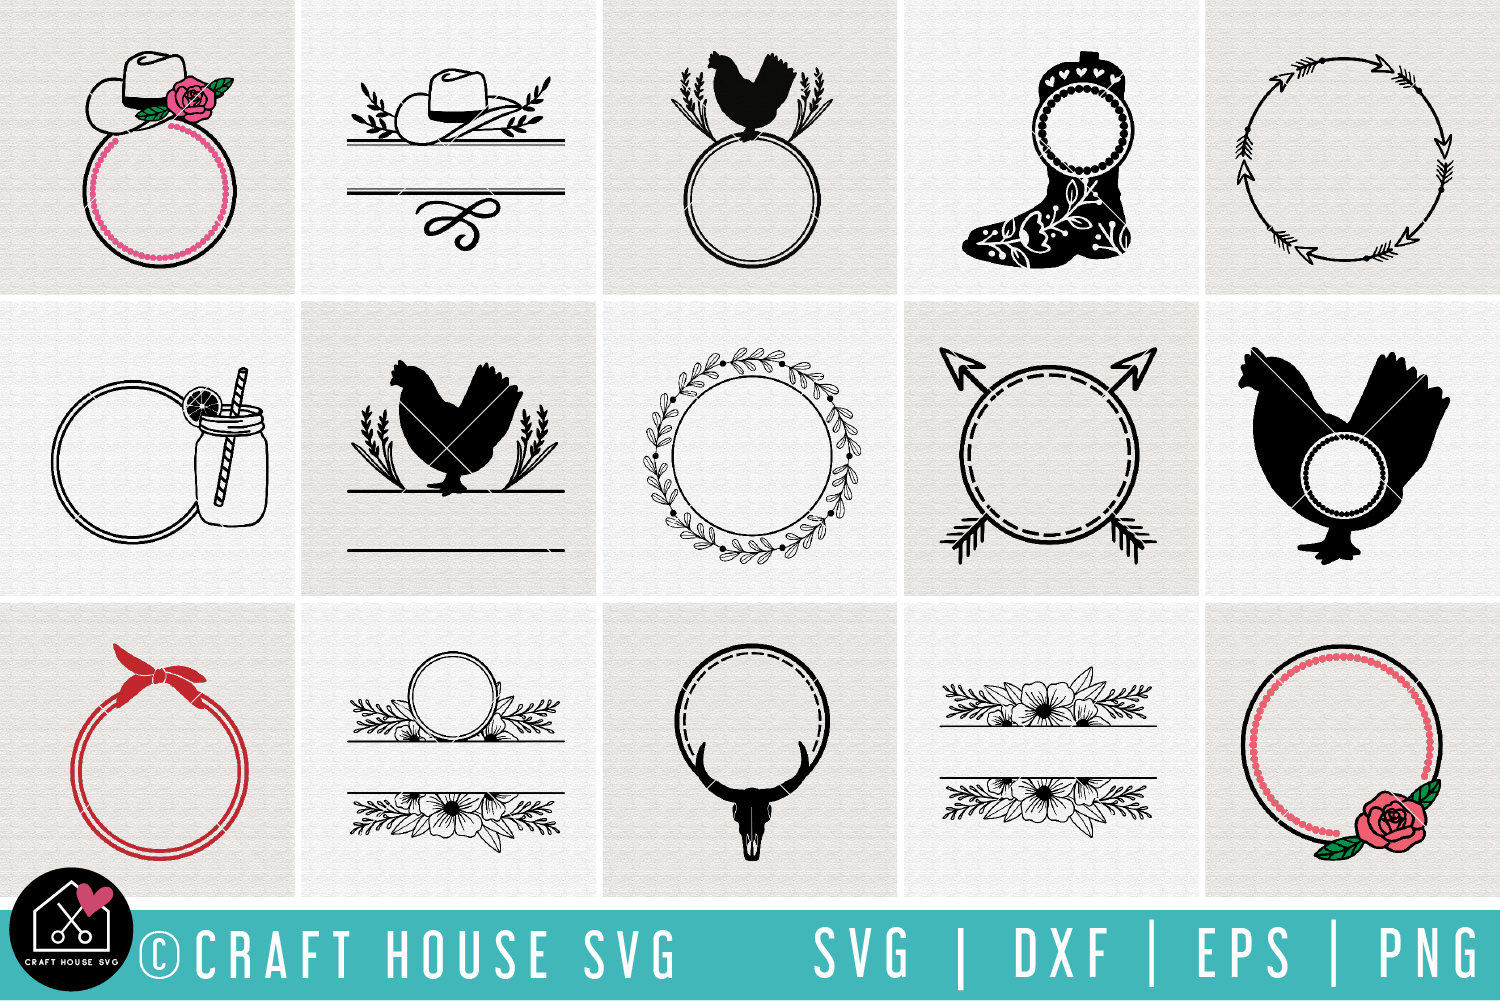 Farmhouse Monogram Frames SVG Bundle | MB73 Craft House SVG - SVG files for Cricut and Silhouette